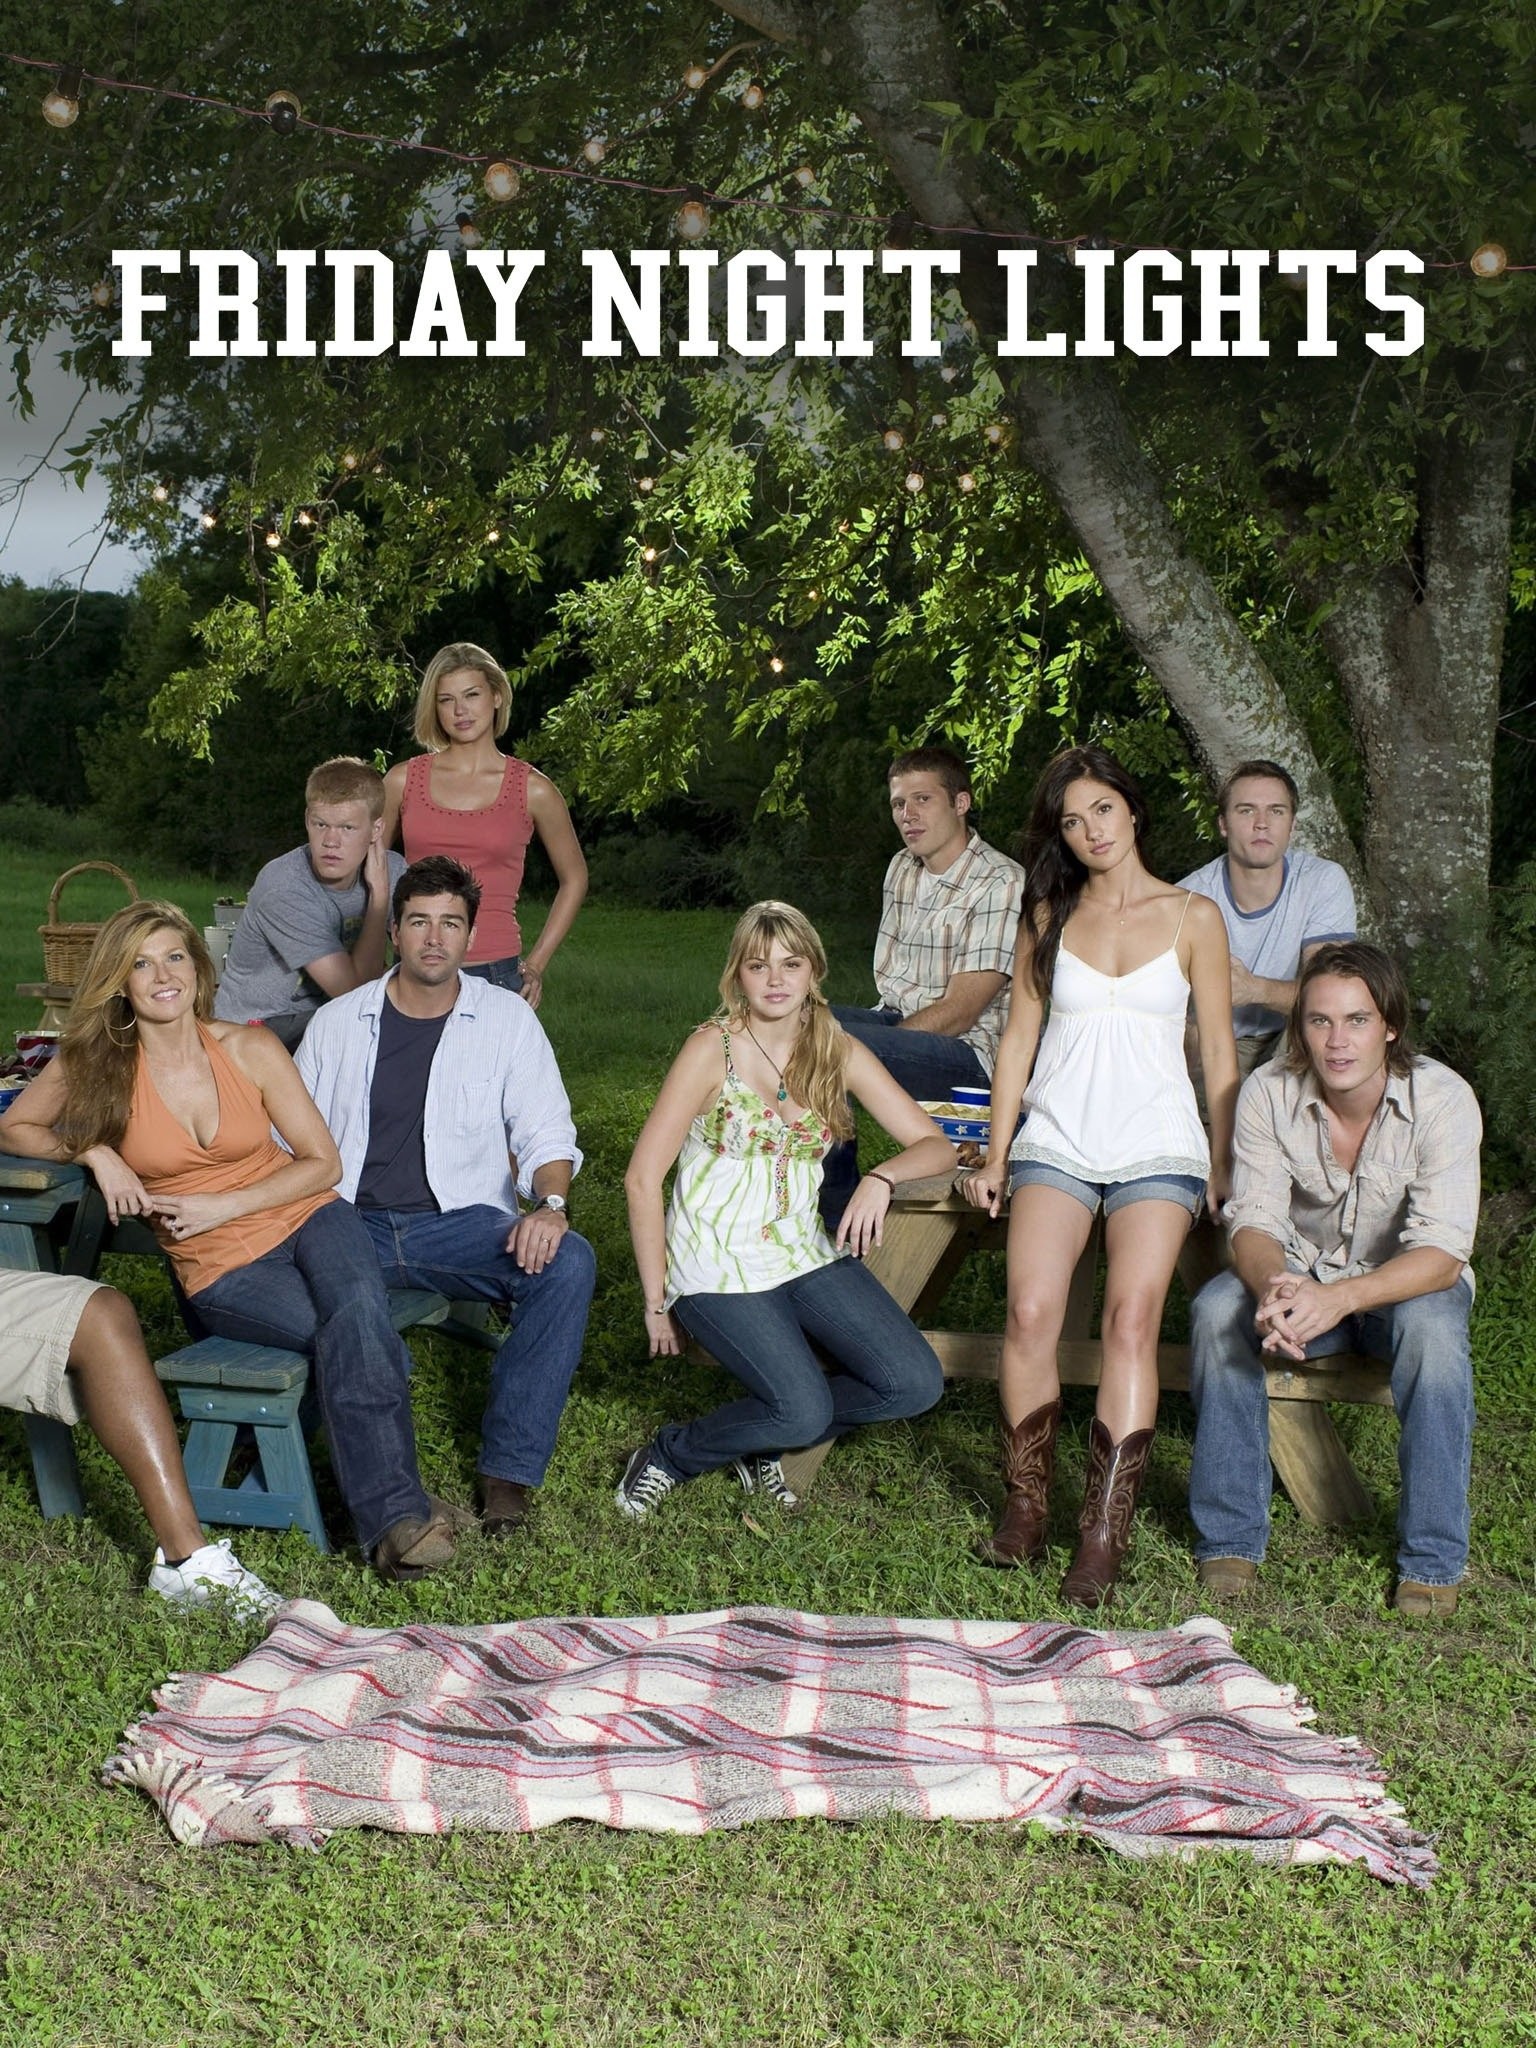 Friday Night Lights (season 4) - Wikipedia